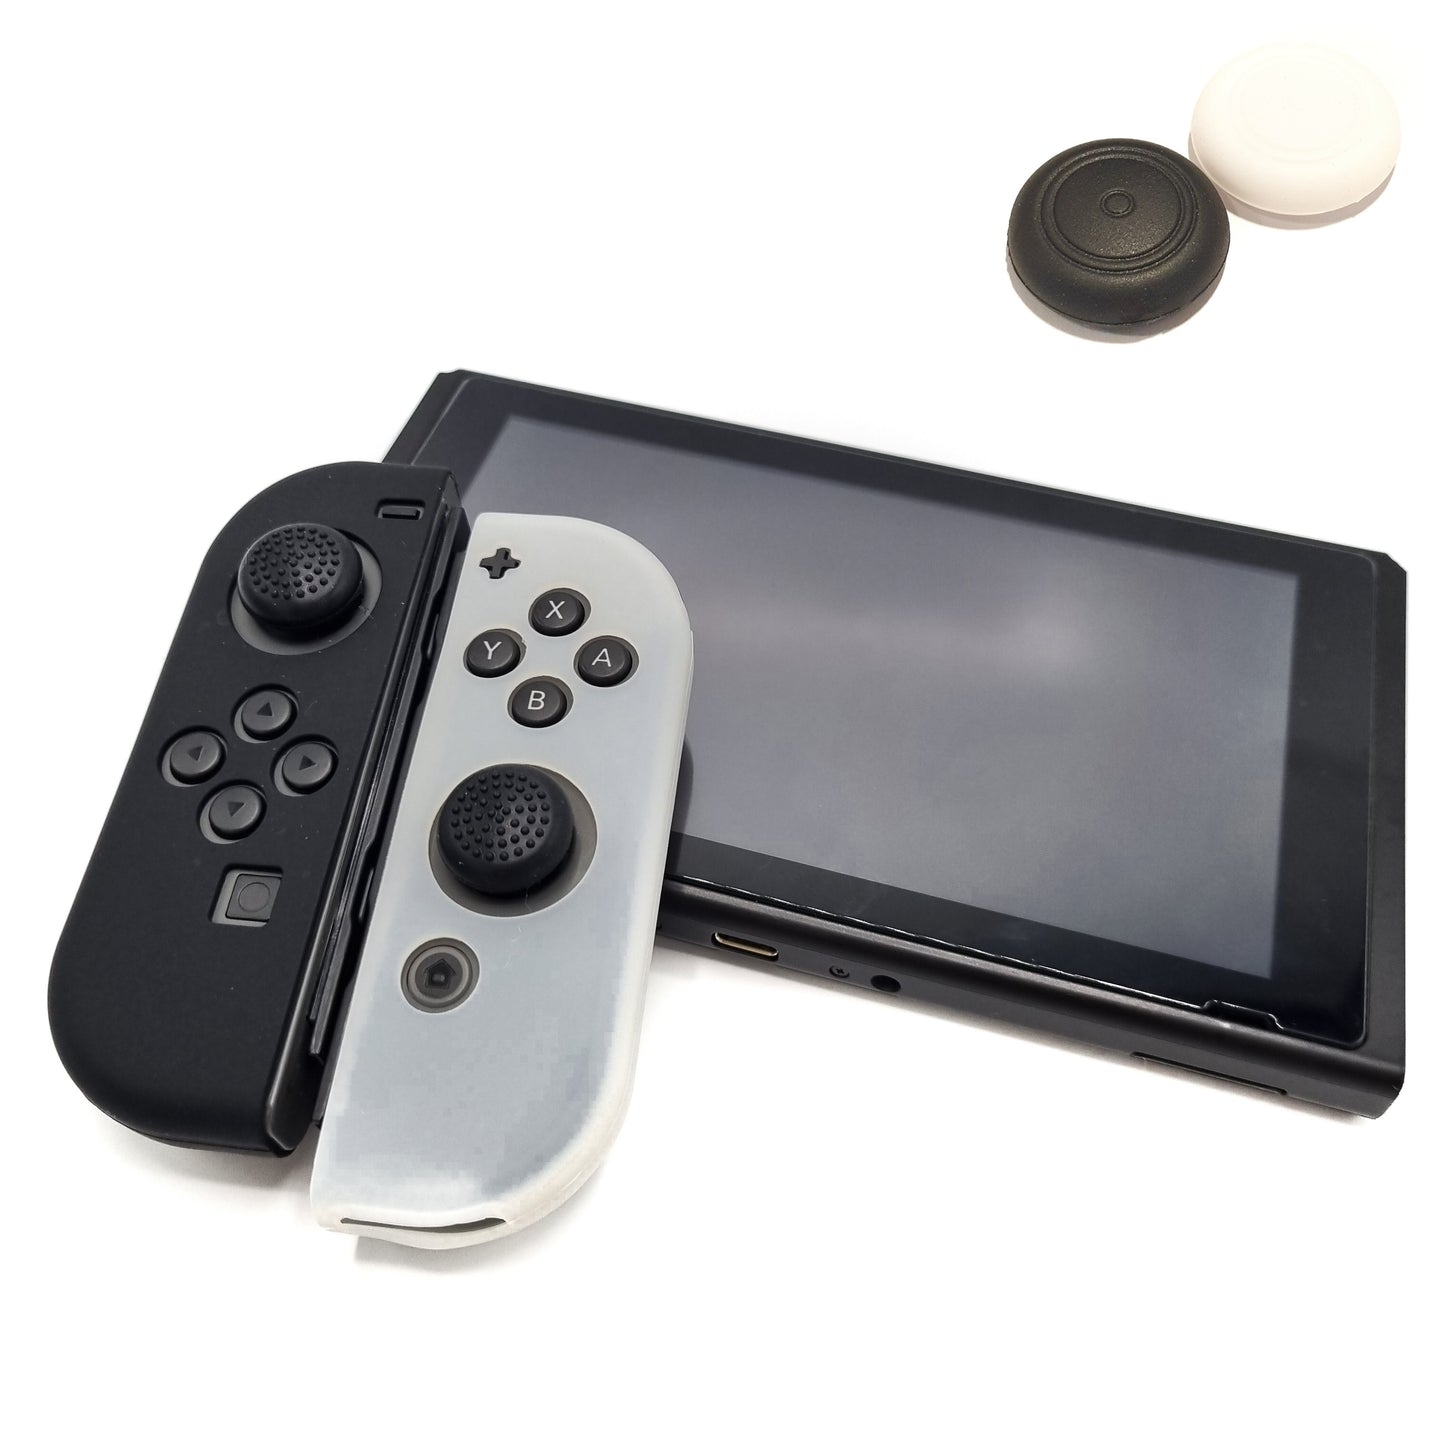 Beschermhoesjes + Thumbgrips | Performance Antislip Skin | Softcover Grip Case | Transparant/Zwart + Zwart/Wit Thumbs | Accessoires geschikt voor Nintendo Switch Joy-Con Controllers